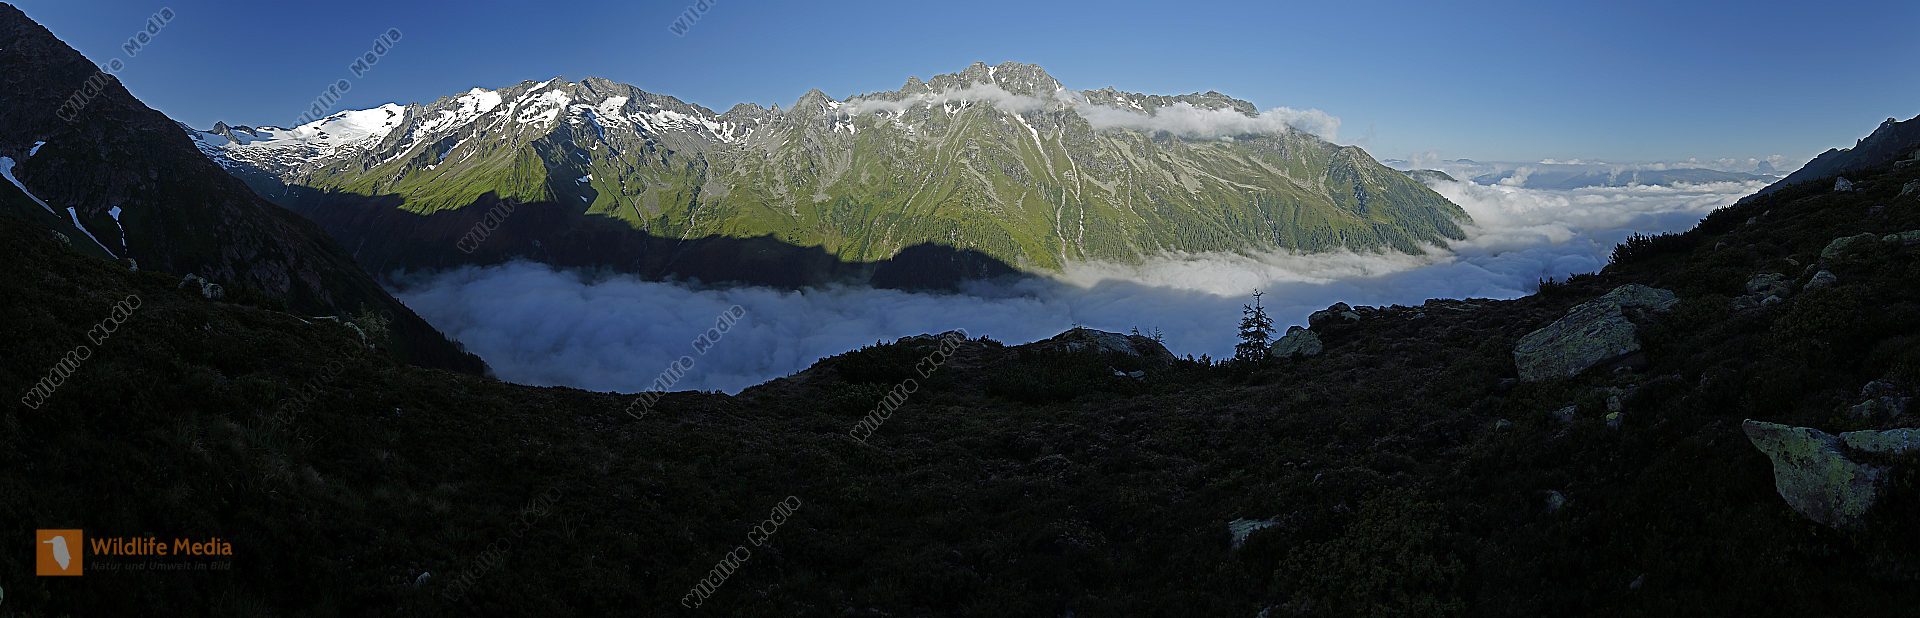 Habachtal Panorama mit Nebelmeer